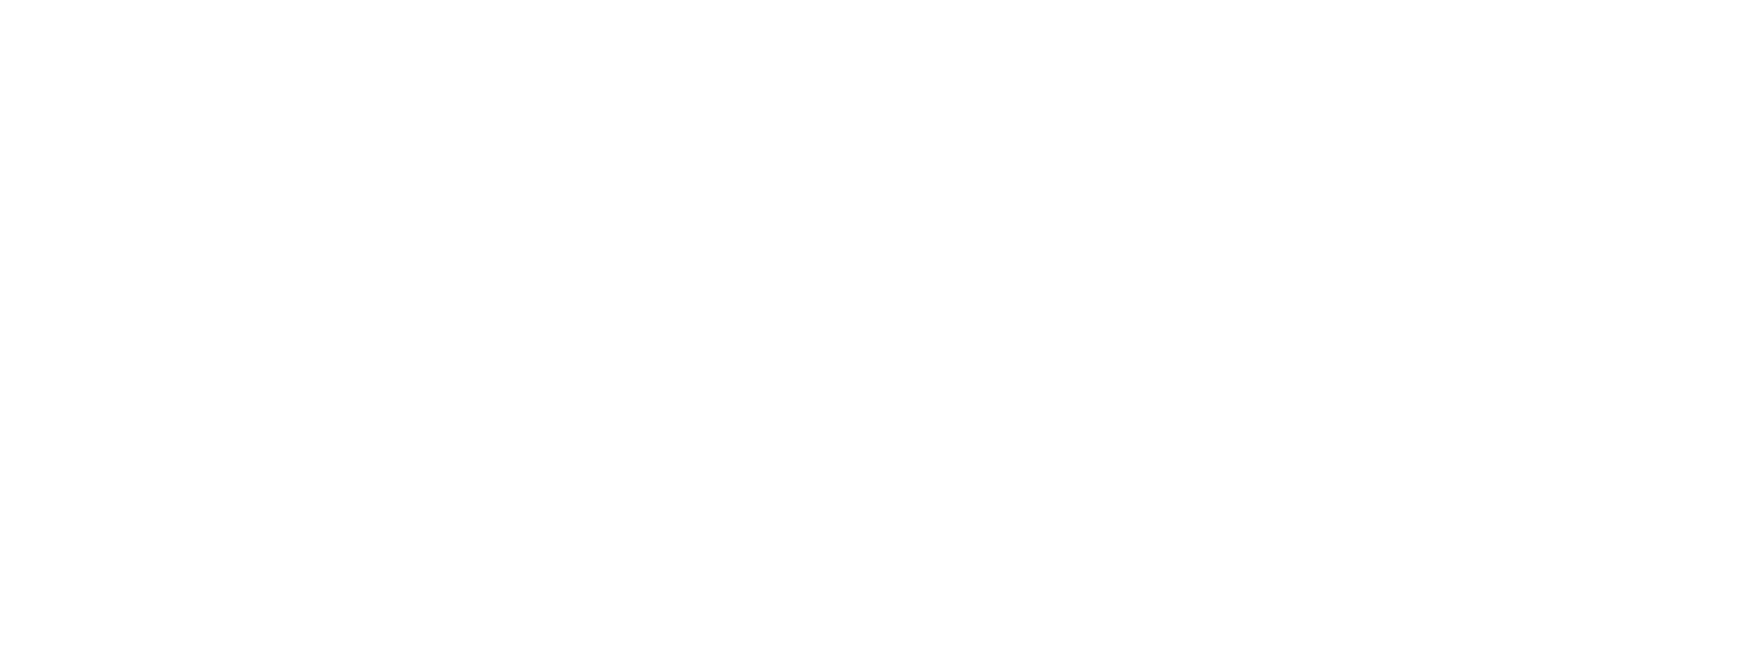 Homicide Hills logo